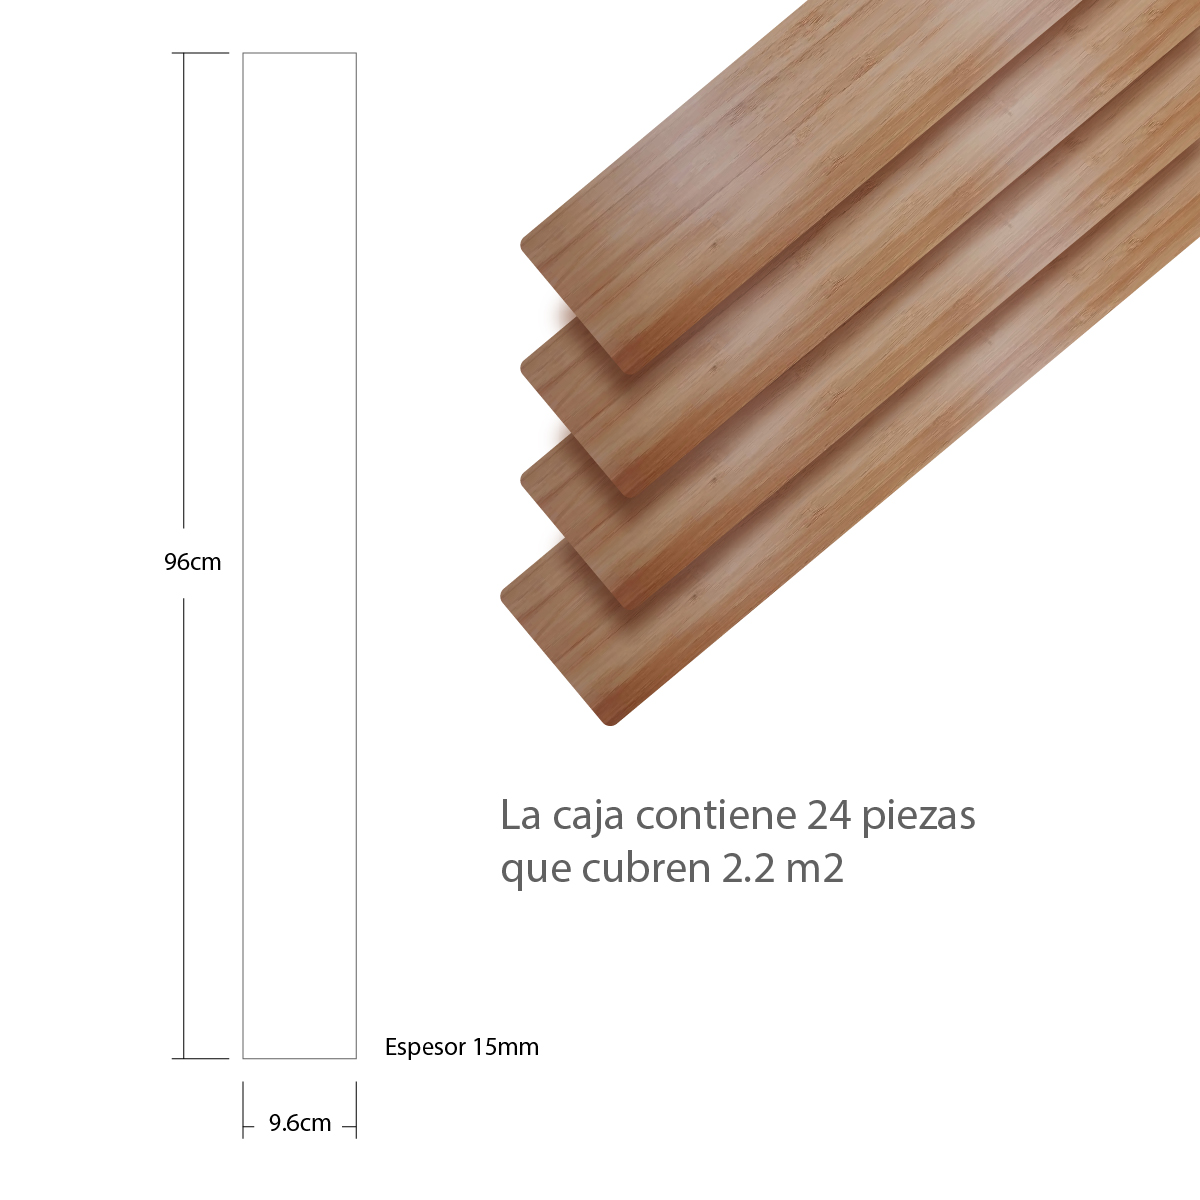 Piso De Bambu. Duela De Bambu Carbonizado Vertical 24 piezas cubre 2.2 m2